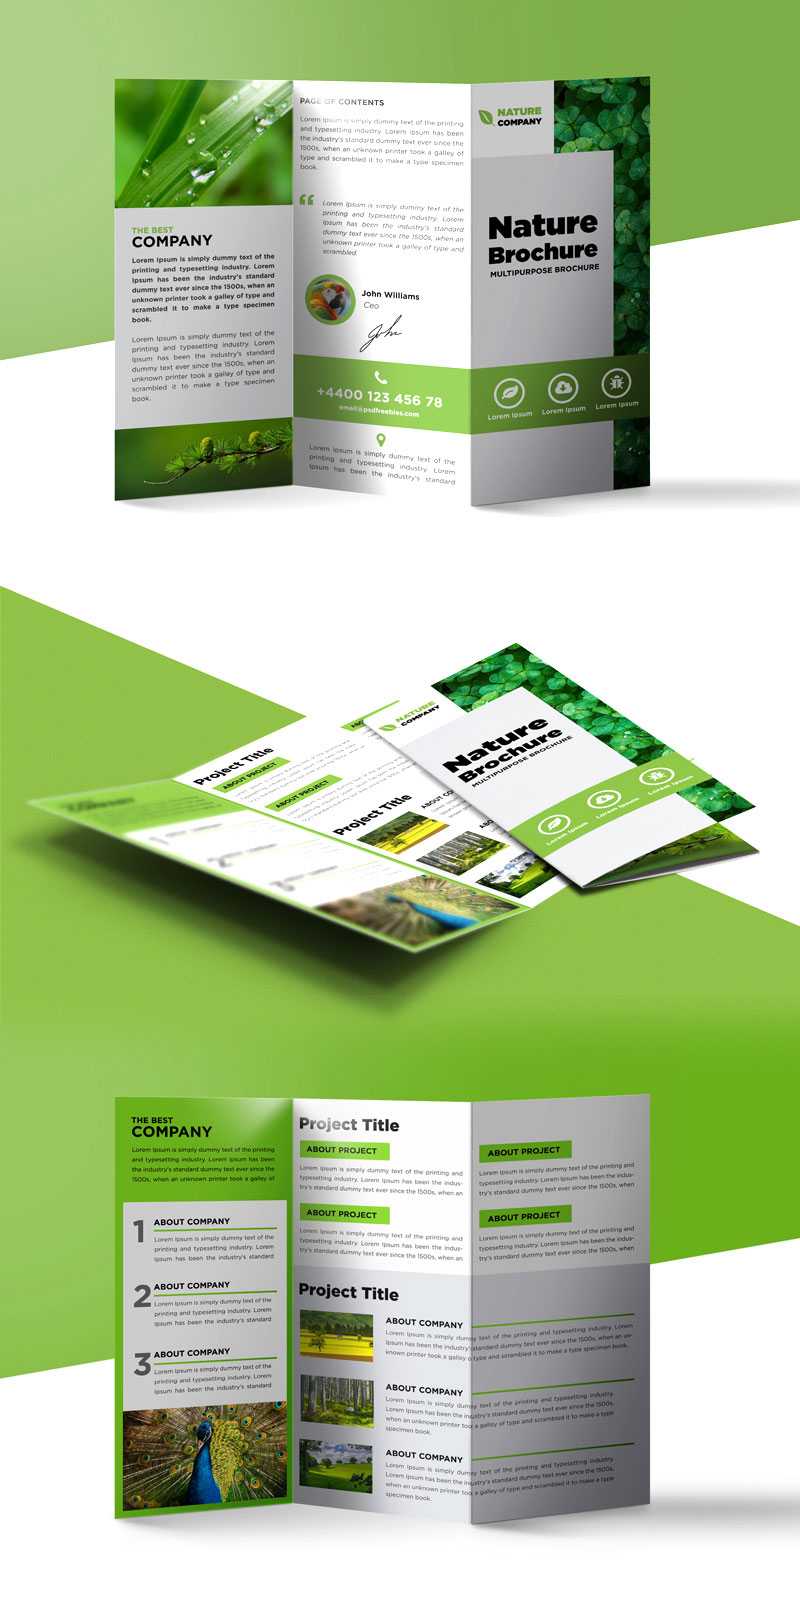 Nature Tri Fold Brochure Template Free Psd | Psdfreebies With 3 Fold Brochure Template Free